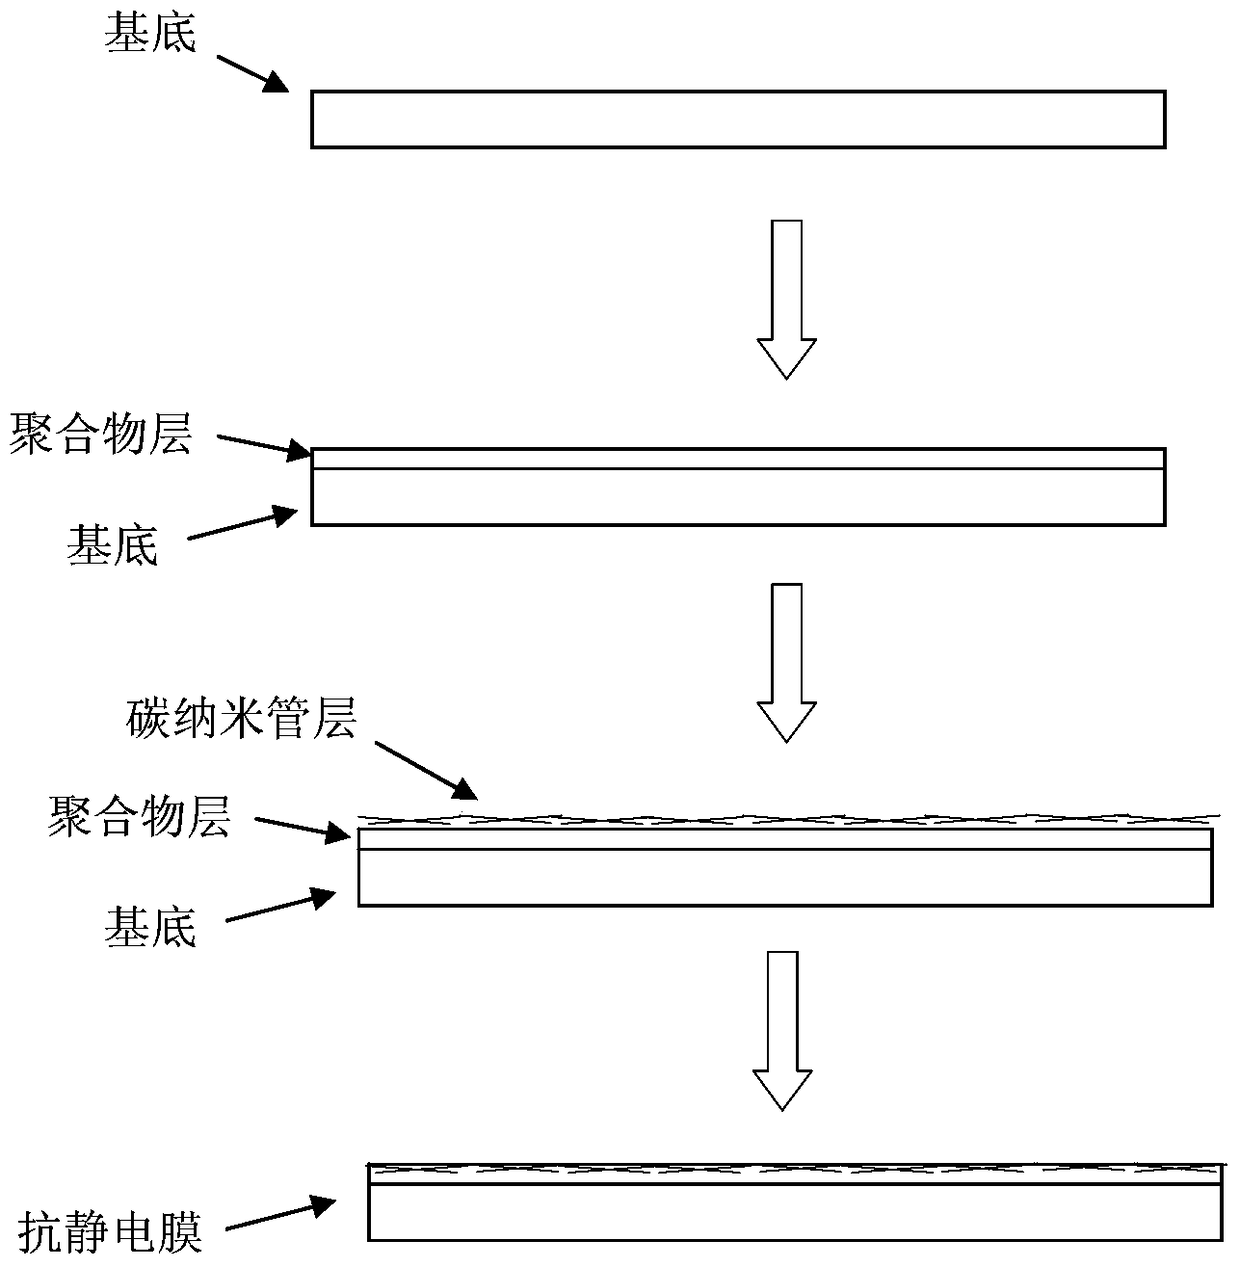 Carbon nanotube antistatic film and preparation method thereof